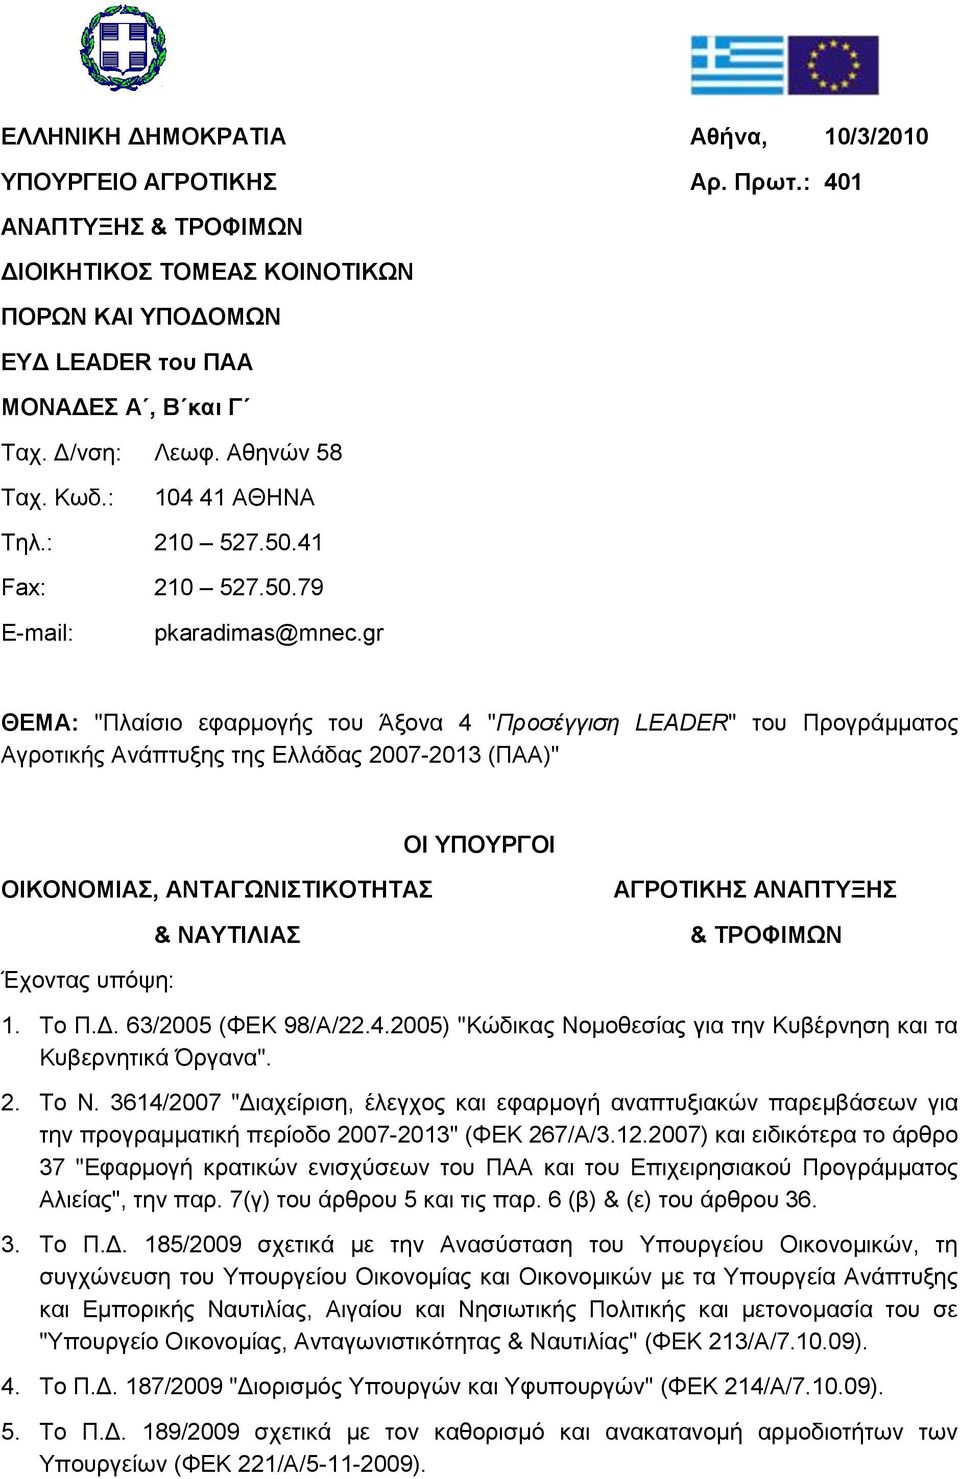 gr ΘΕΜΑ: "Πλαίσιο εφαρμογής του Άξονα 4 "Προσέγγιση LEADER" του Προγράμματος Αγροτικής Ανάπτυξης της Ελλάδας 2007-2013 (ΠΑΑ)" ΟΙ ΥΠΟΥΡΓΟΙ ΟΙΚΟΝΟΜΙΑΣ, ΑΝΤΑΓΩΝΙΣΤΙΚΟΤΗΤΑΣ & ΝΑΥΤΙΛΙΑΣ ΑΓΡΟΤΙΚΗΣ